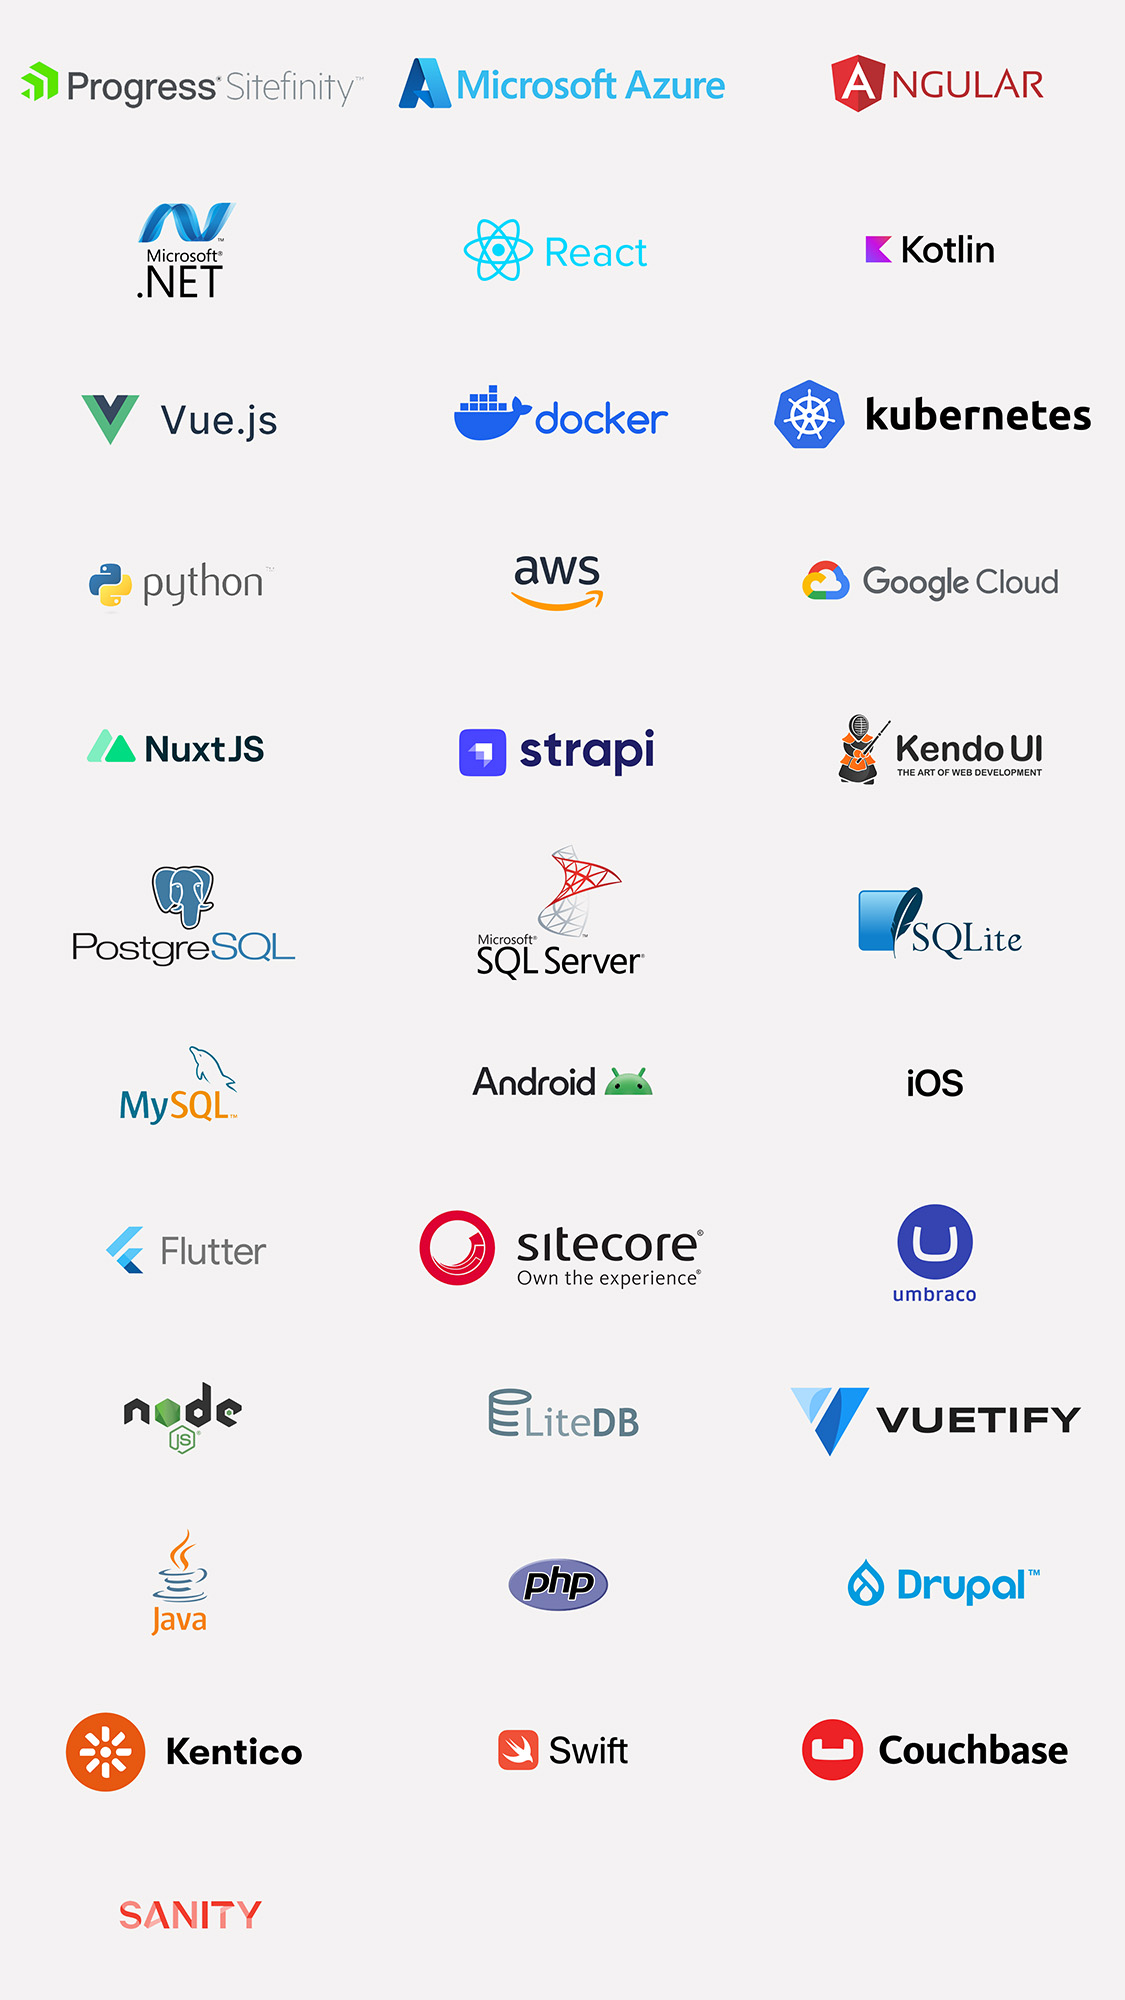 BAYOOTEC - unsere Partner, Produkte und Technologien - Progress Sitefinity, Azure, .NET, AWS, Google Cloud, Vue.js, Docker, Kurbernetes und weitere